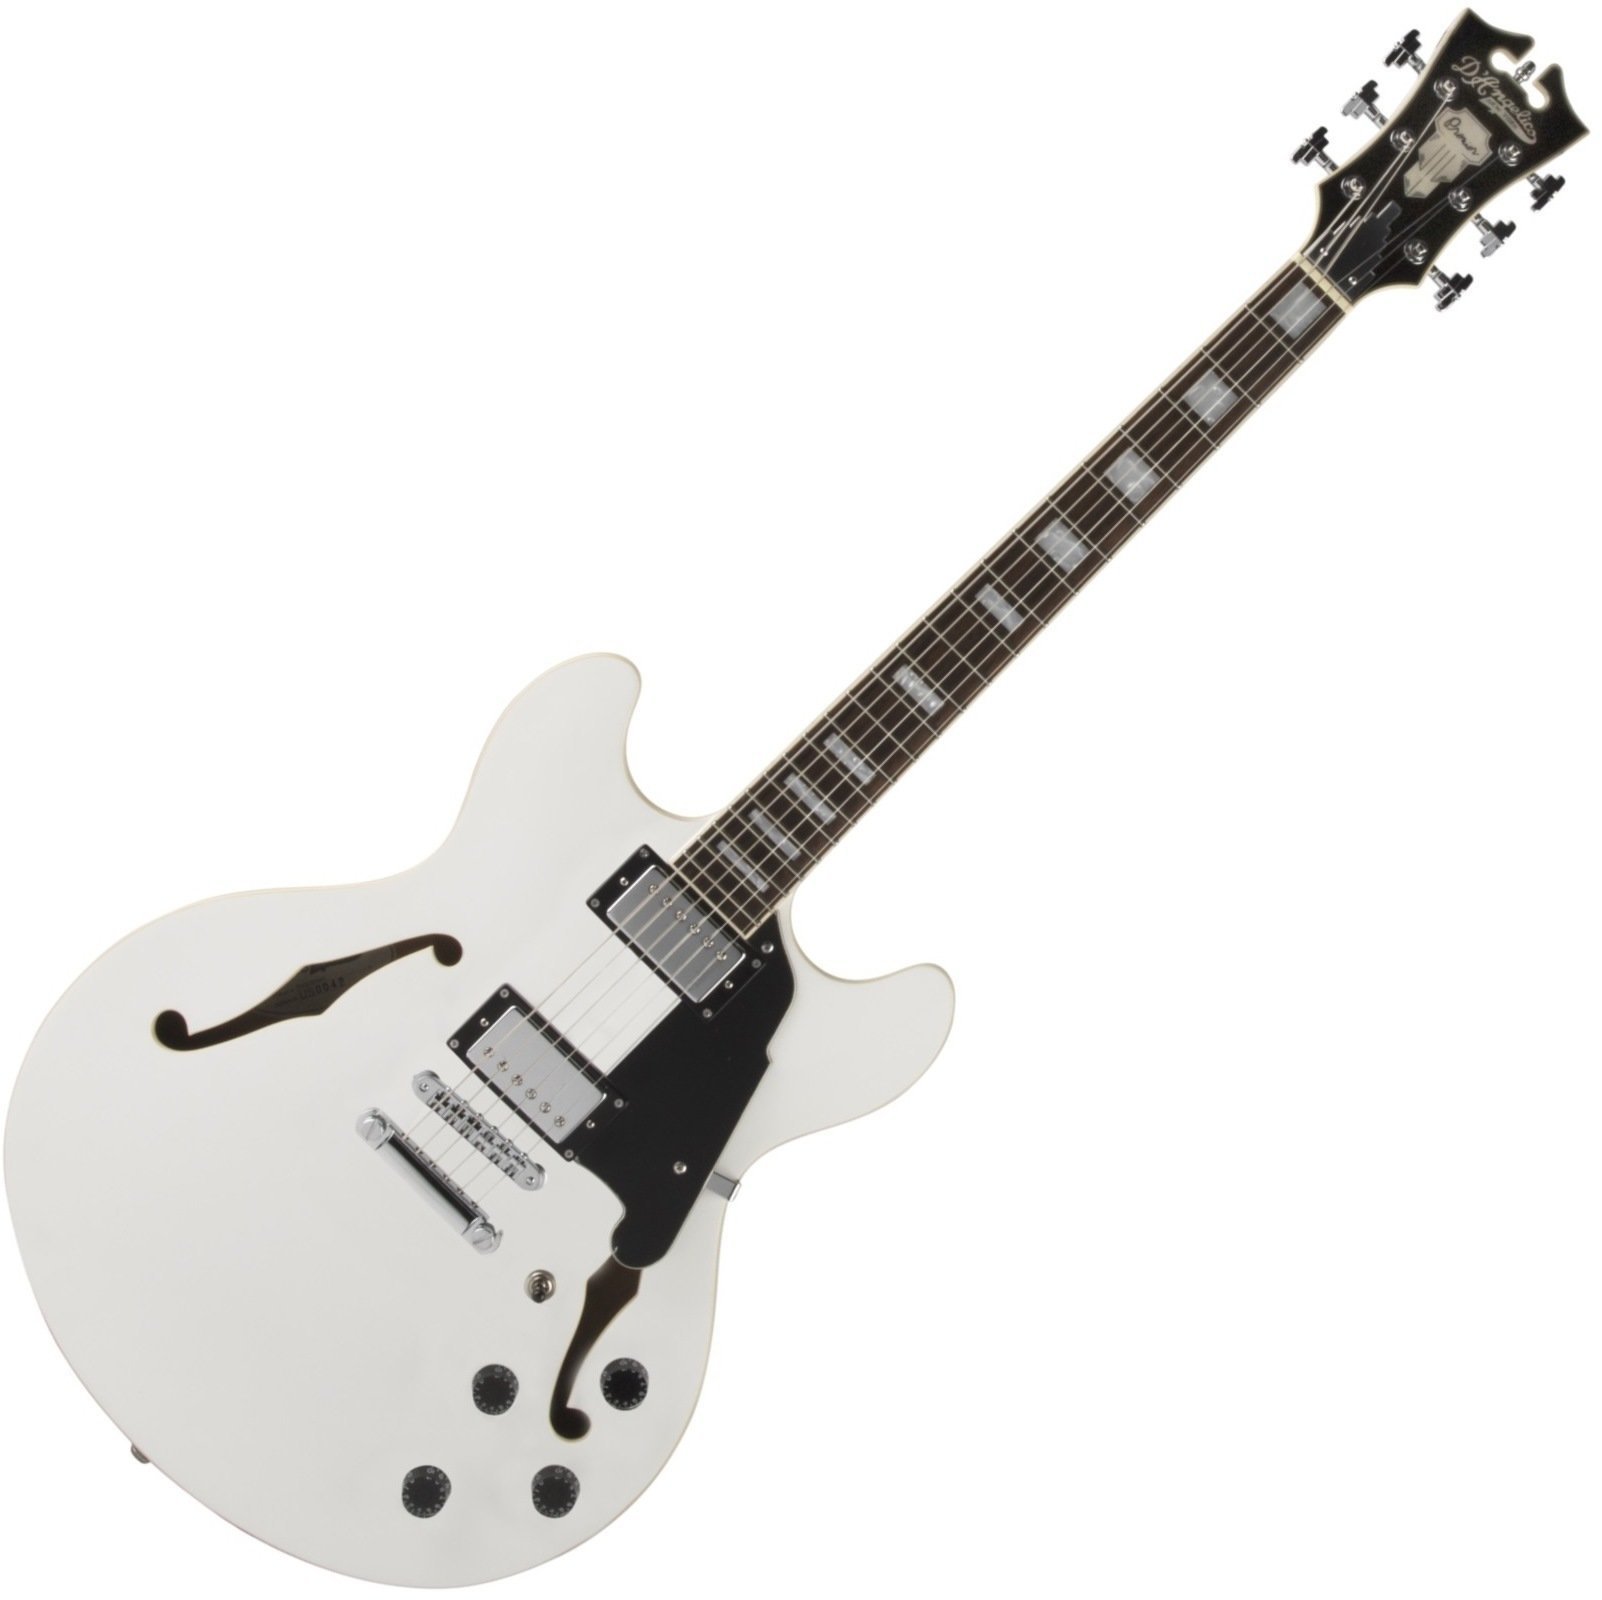 Semiakustická kytara D'Angelico Premier DC Stop-bar Bílá